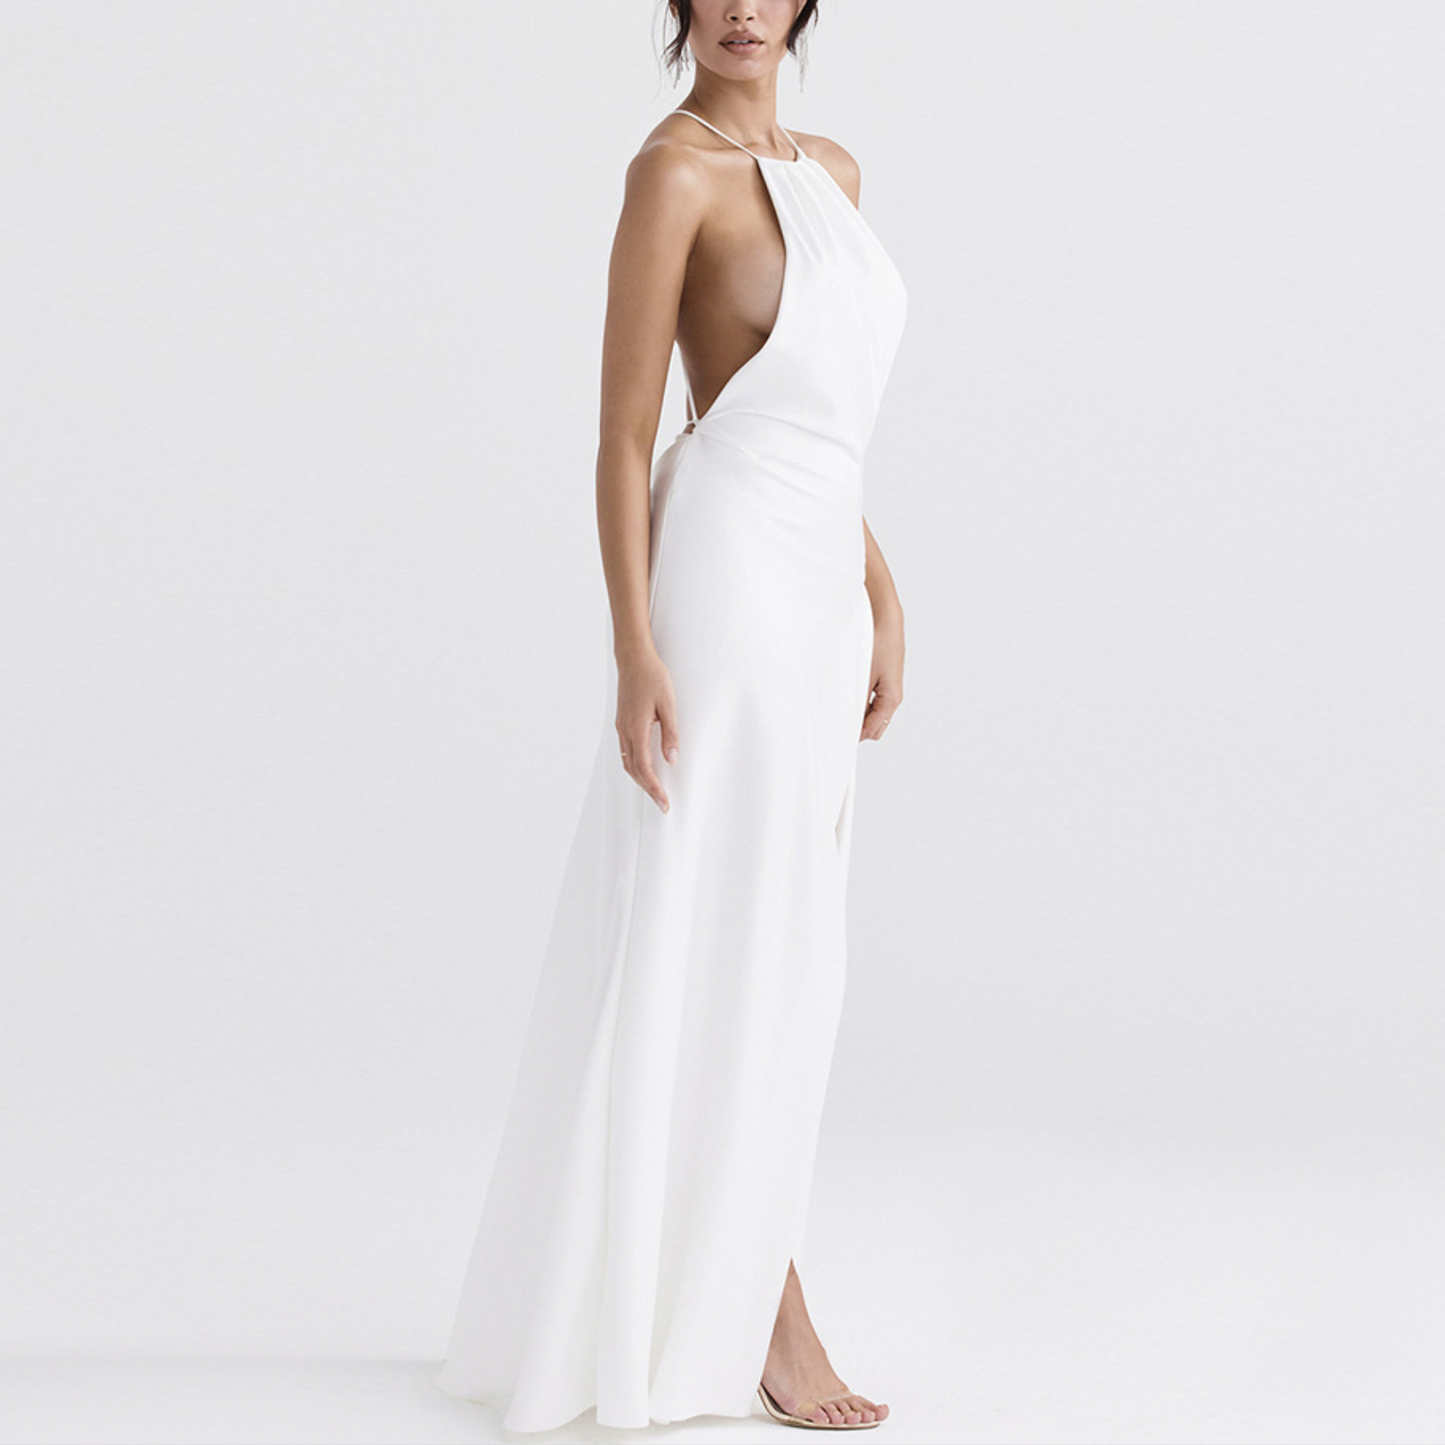 Sarita - White Satin Backless Halter Neck Maxi Dress